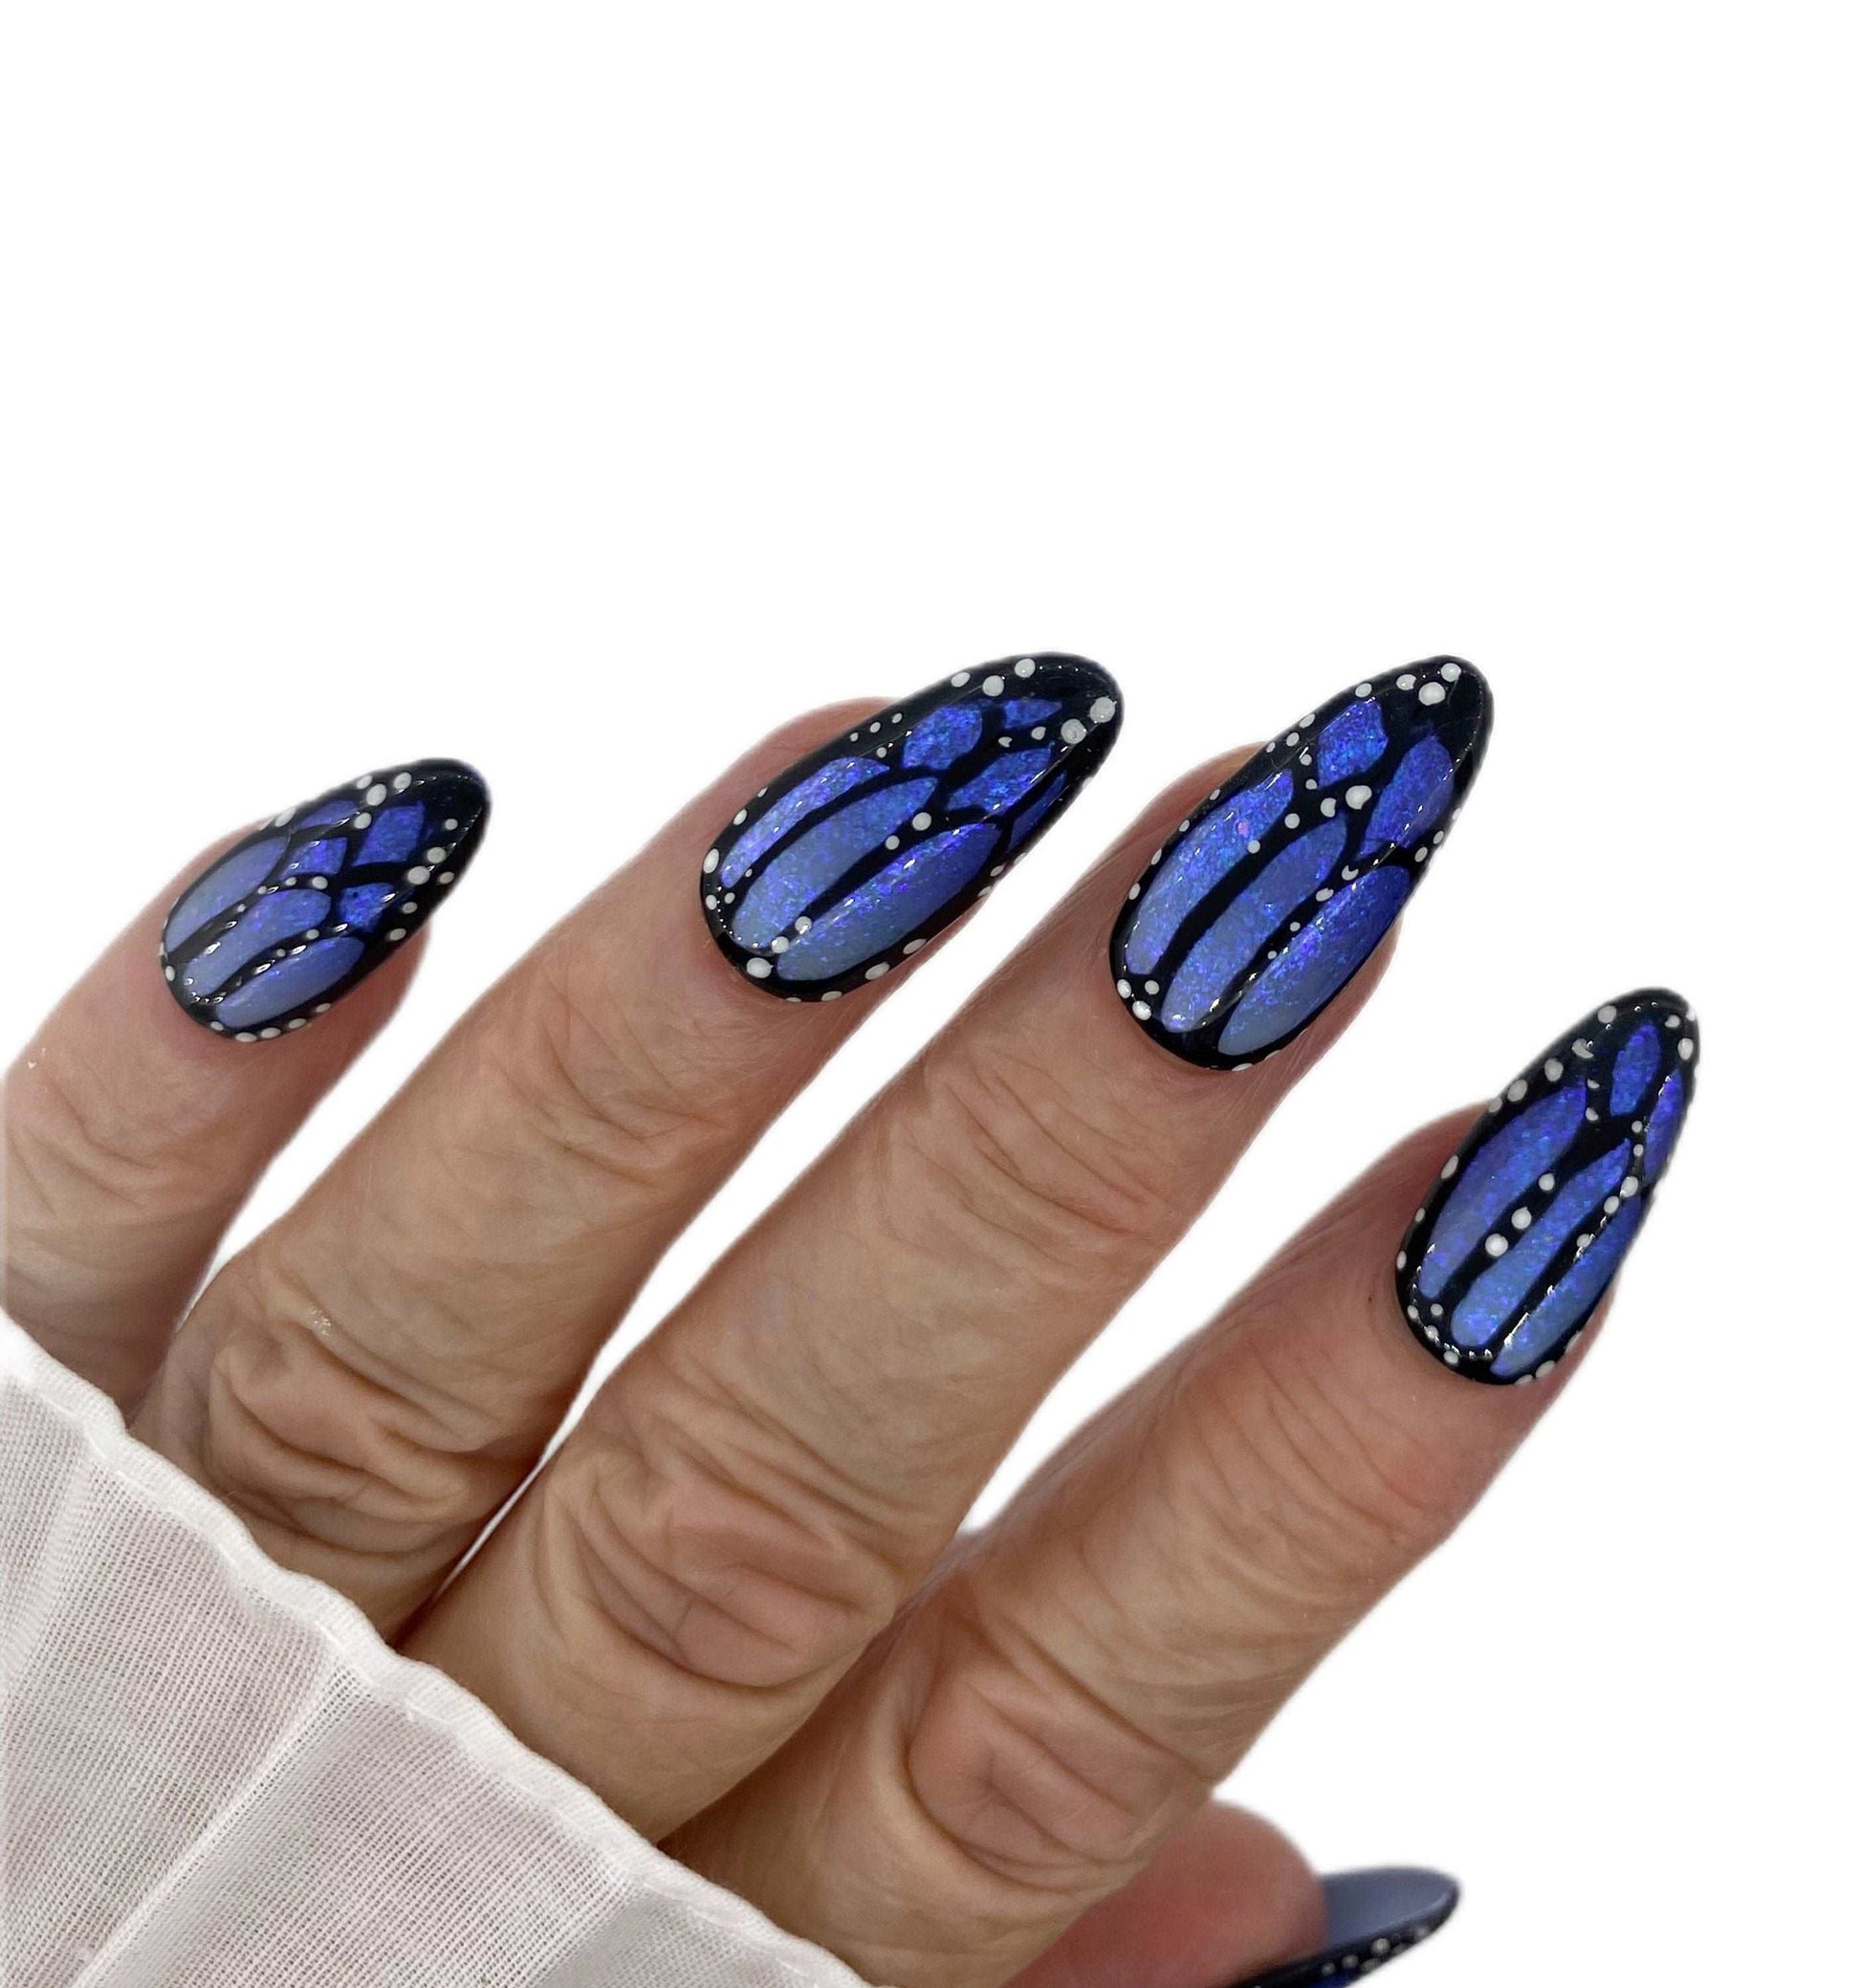 Ombre Butterfly Fairy Press on Nails - Handmade Long Short Custom Design